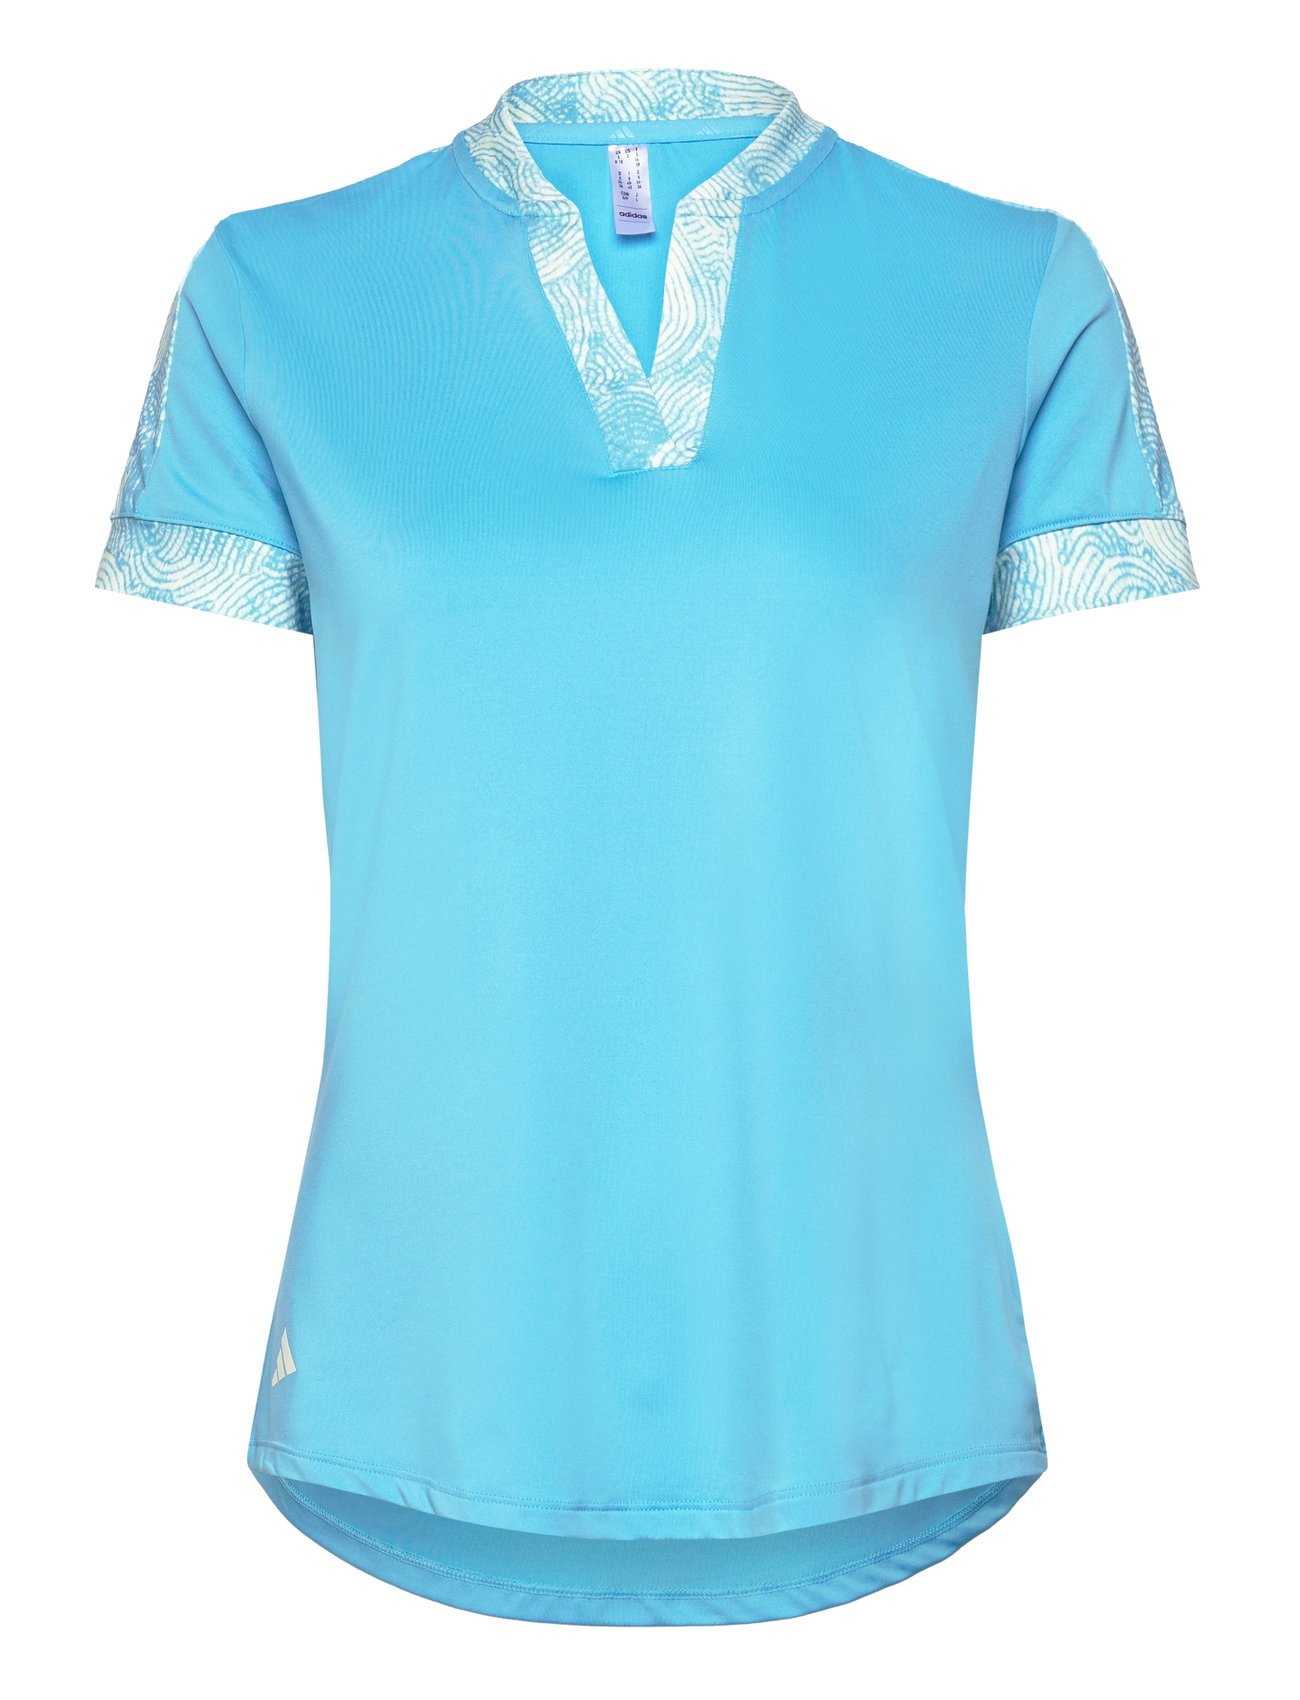 W Ult C Prt Ss Sport T-shirts & Tops Polos Blue Adidas Golf